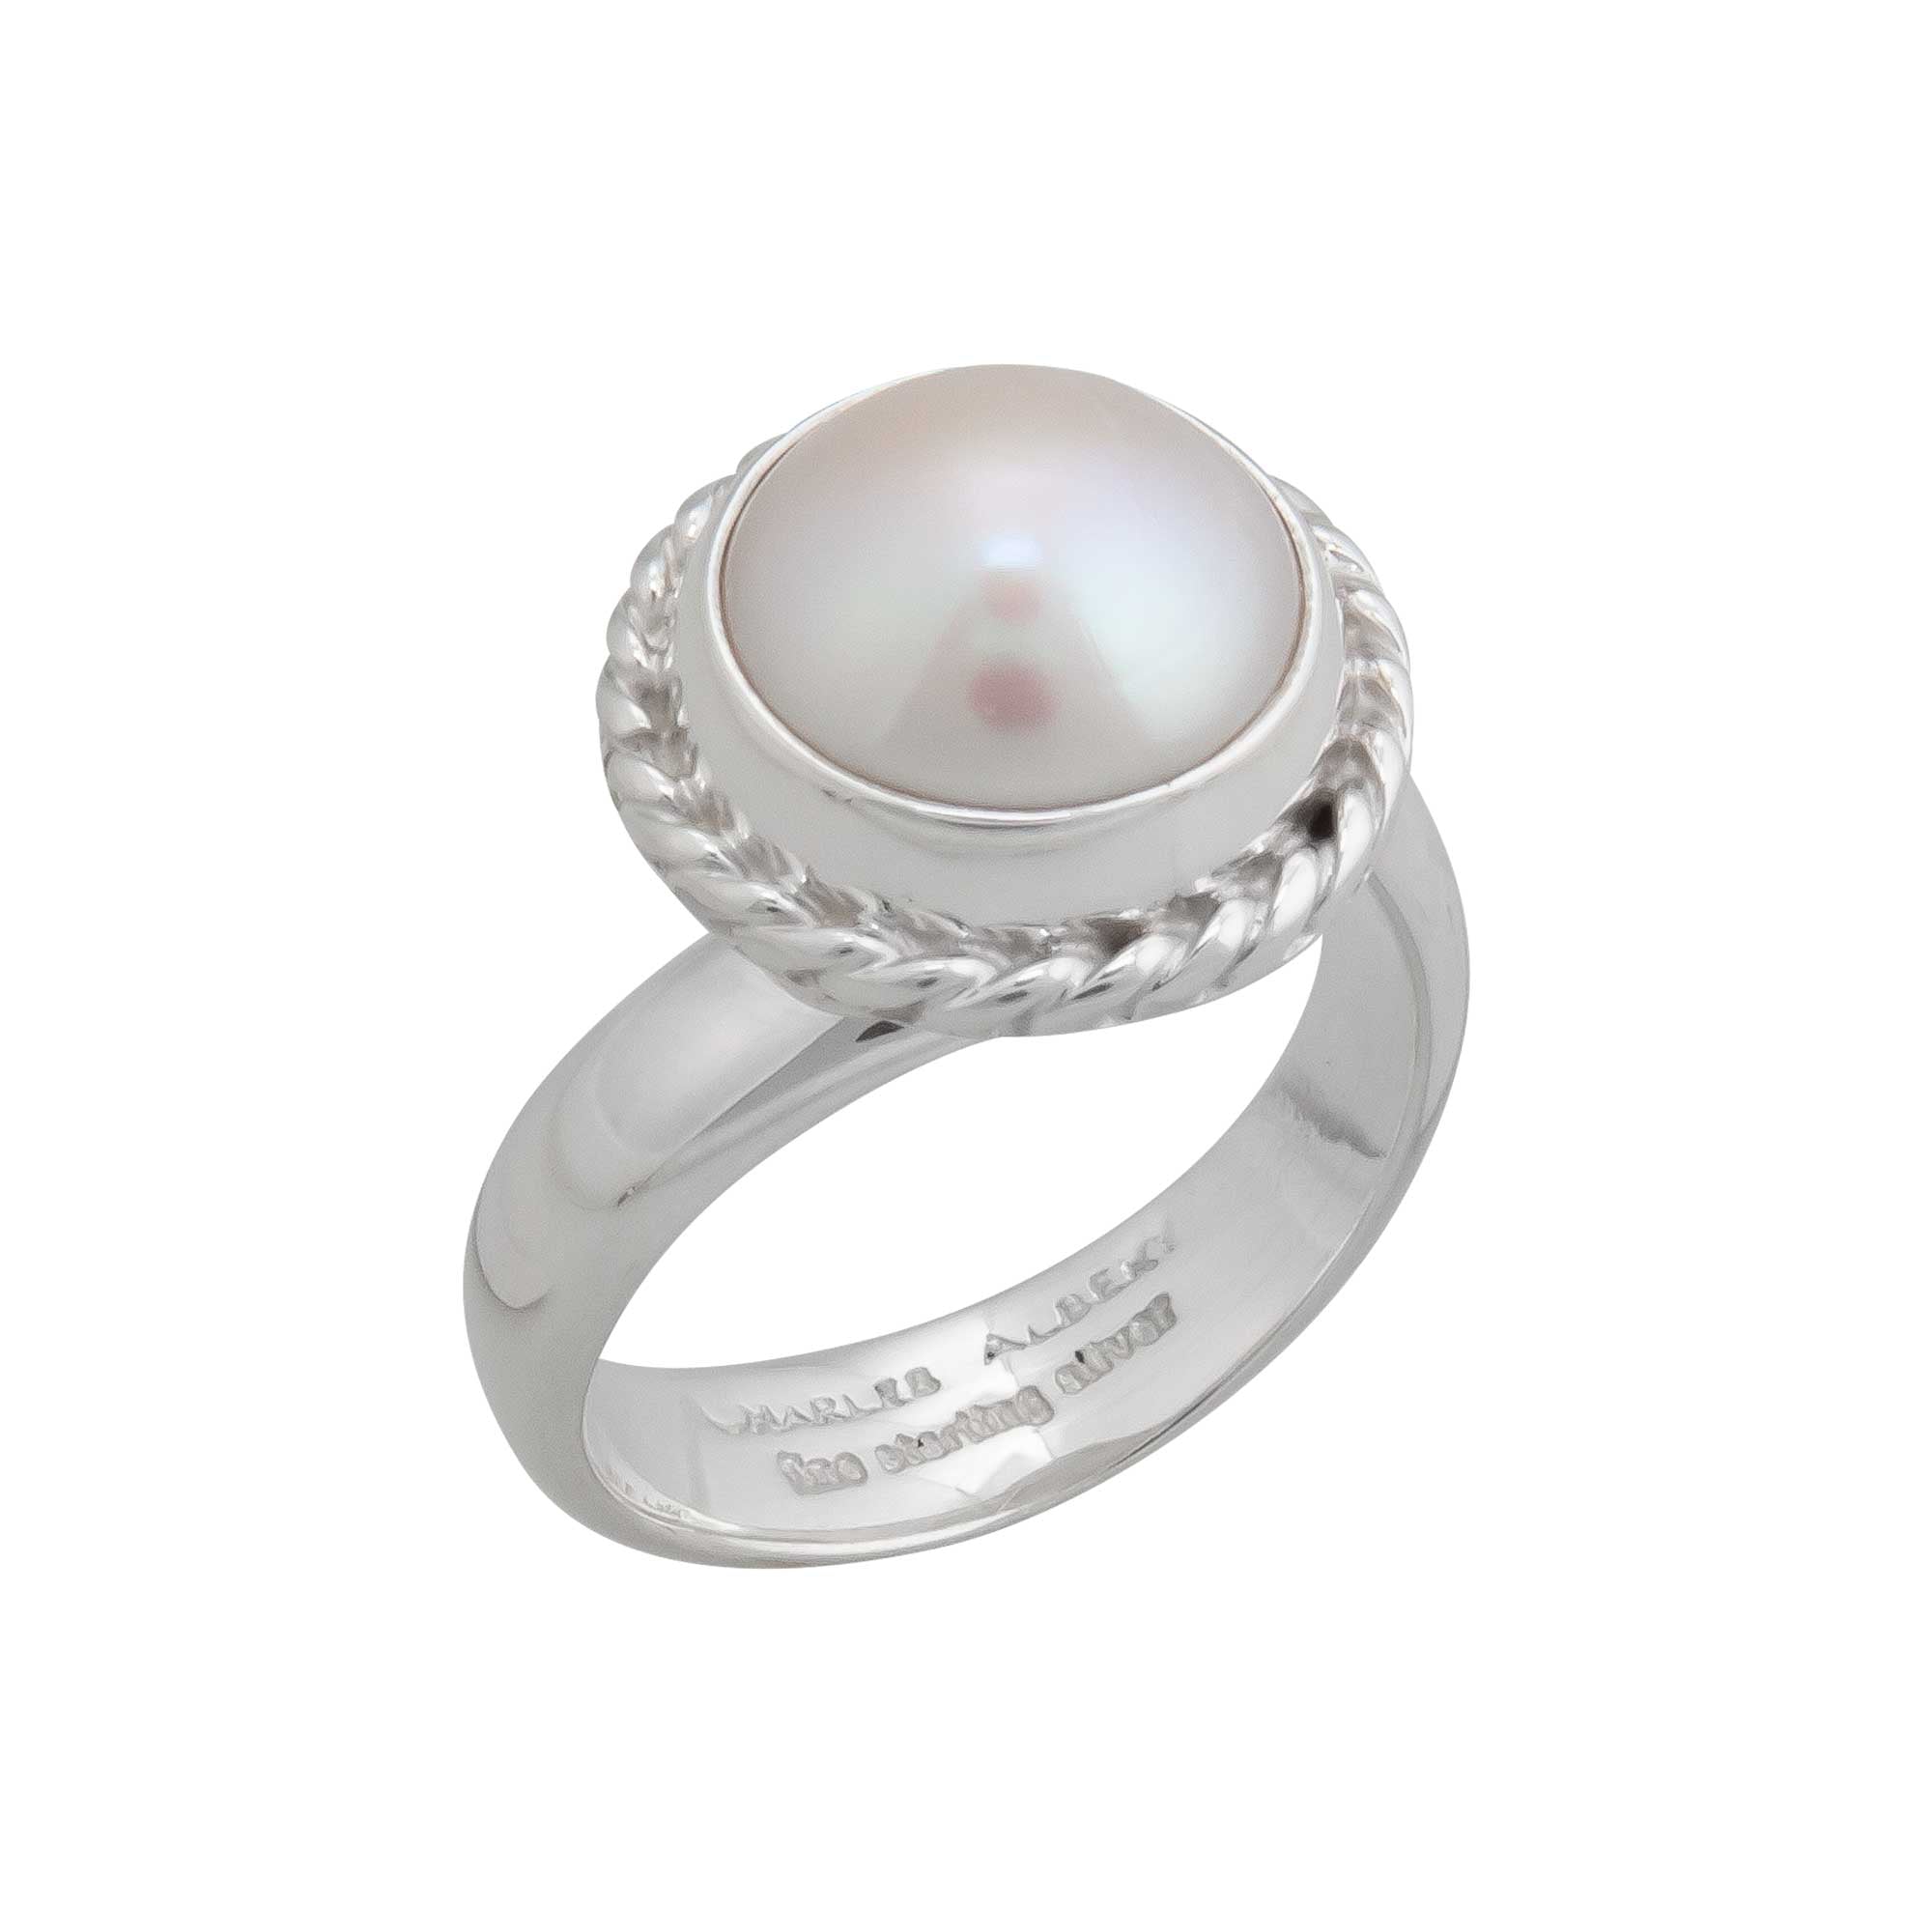 Stunning Design White Pearl Ring Balinese Silversmith Sterling Silver 925 -  LotusTraders